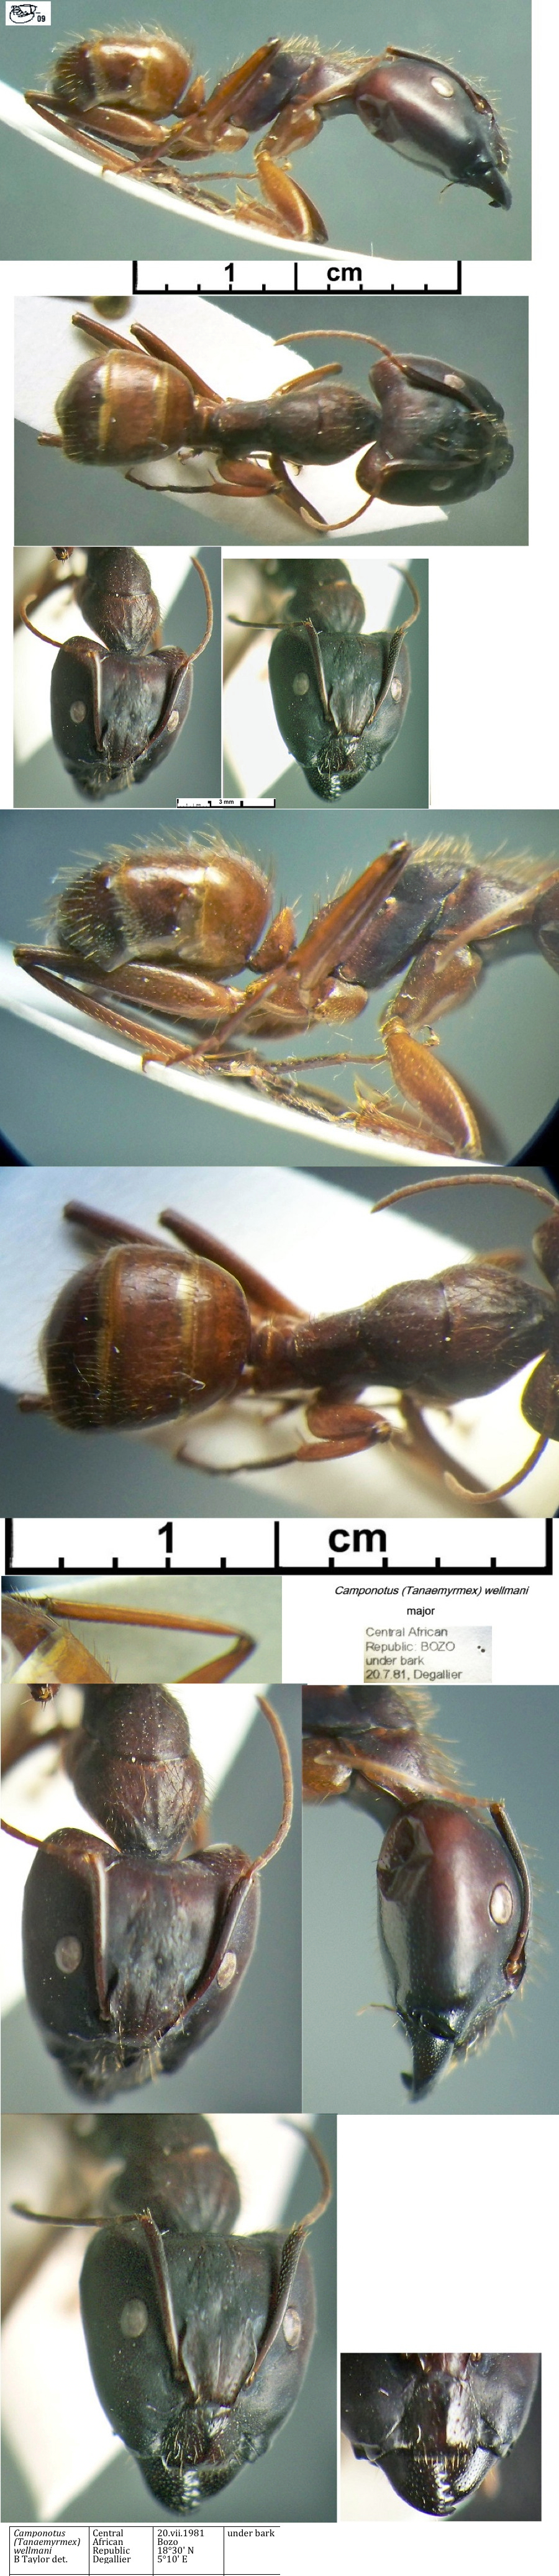 {Camponotus wellmani major}